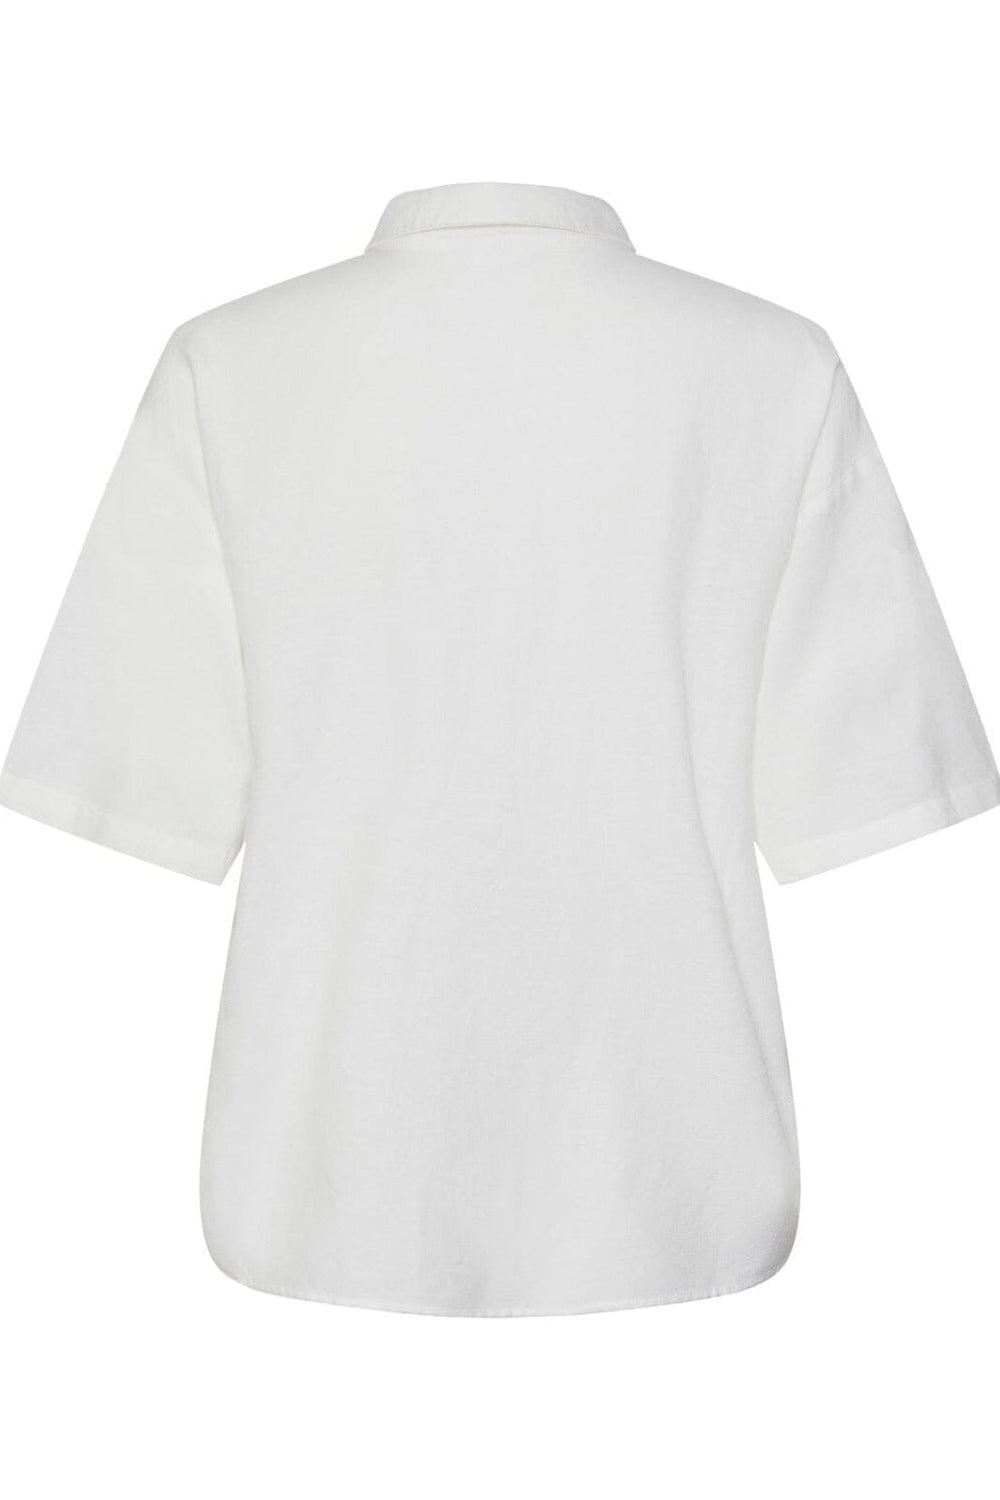 Pieces - Pcmilano Ss Shirt - 4368643 Bright White Skjorter 